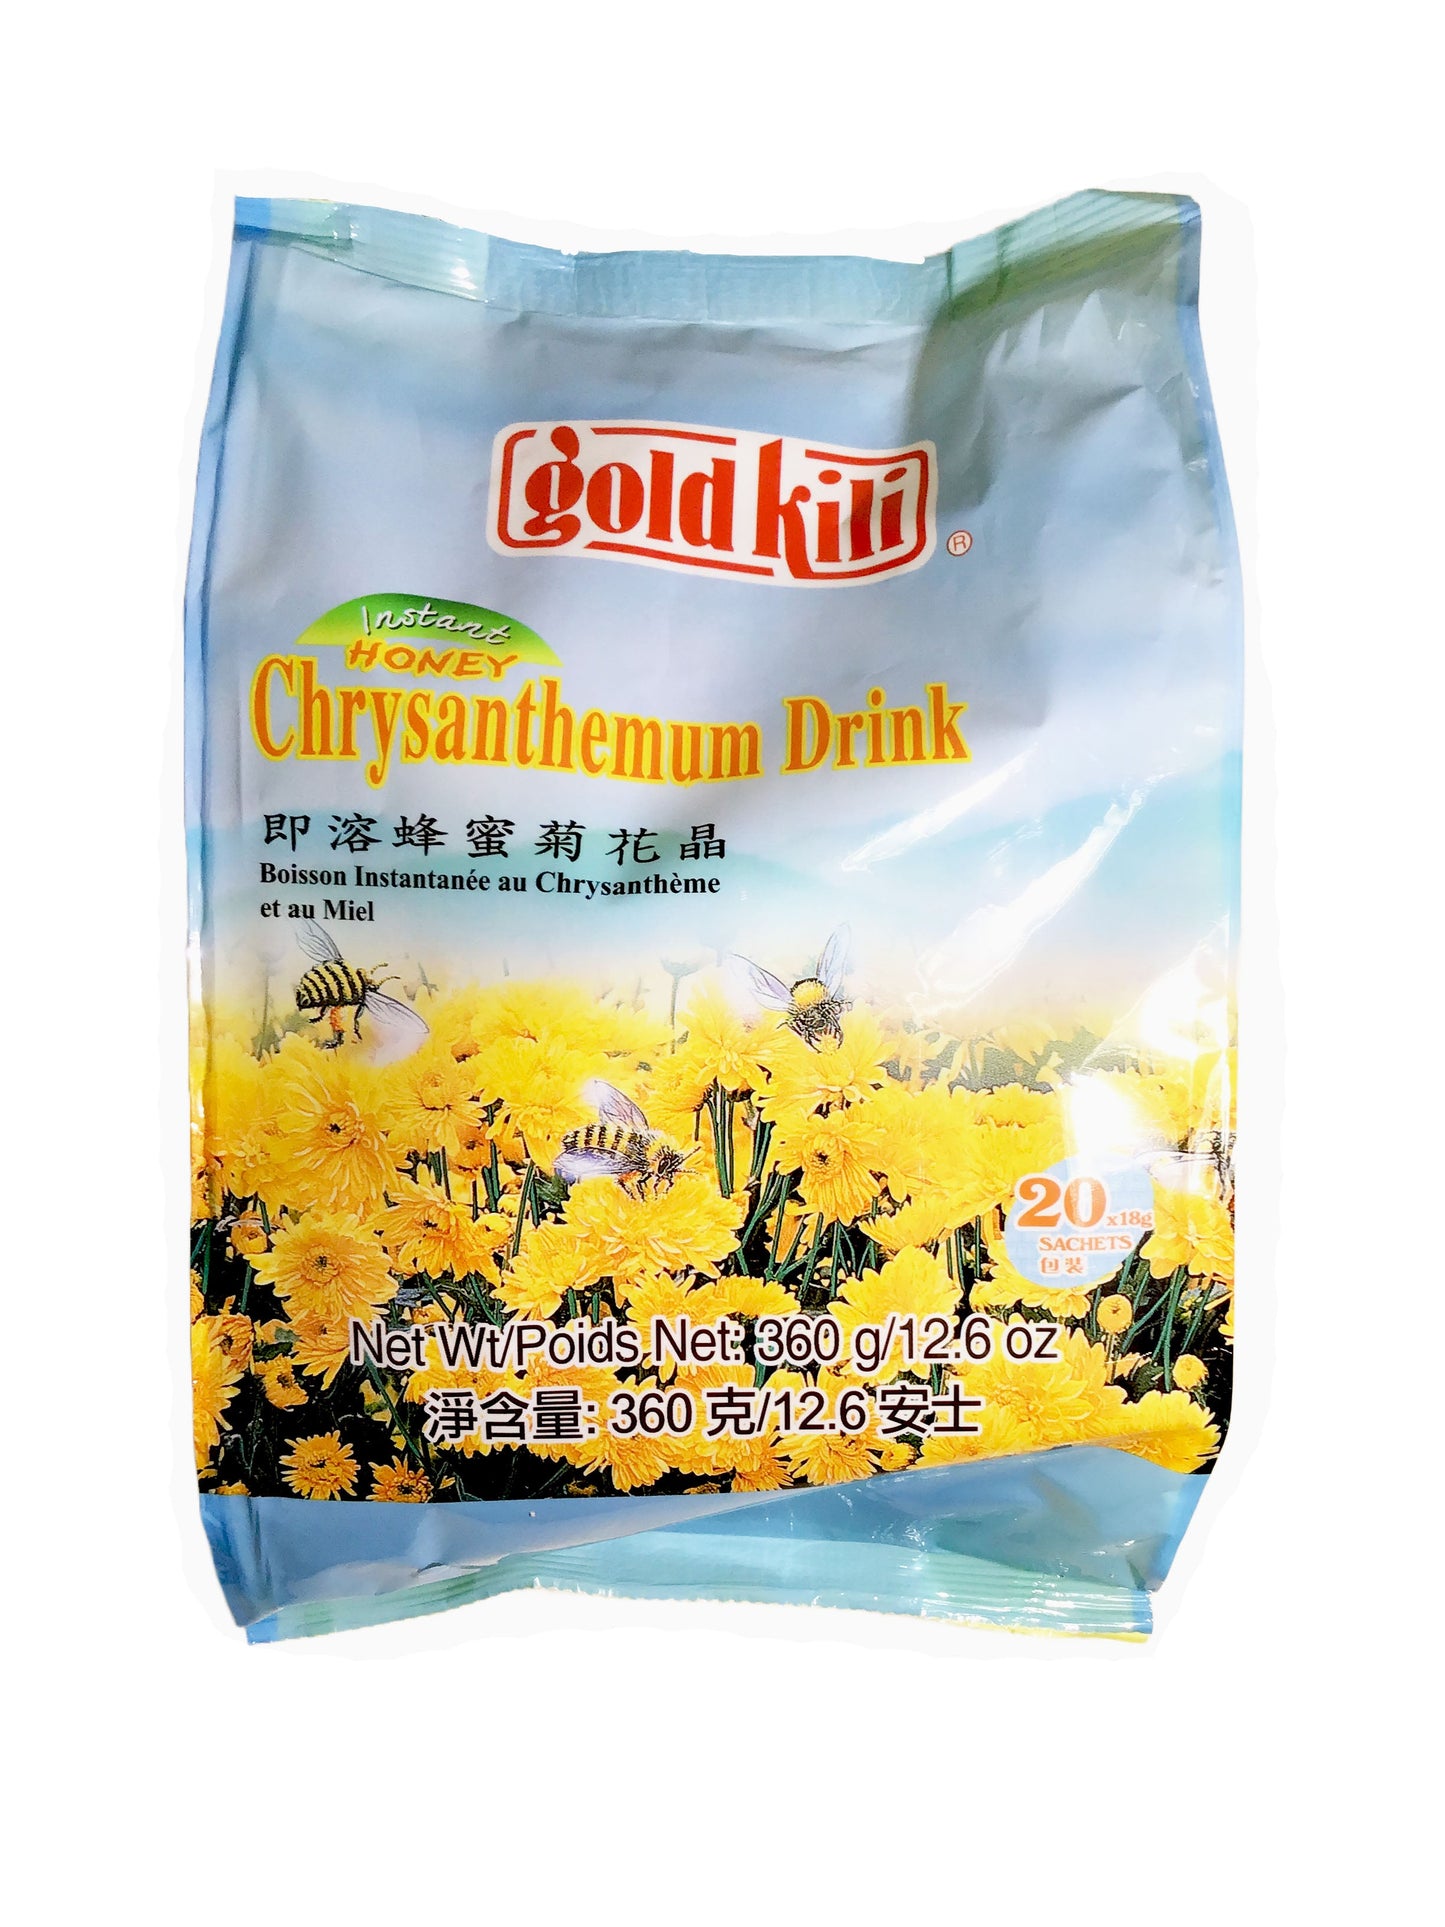 GOLD KILI Instant Honey Chrysanthemum Drink 即溶蜂蜜菊花晶, 20 Sachets